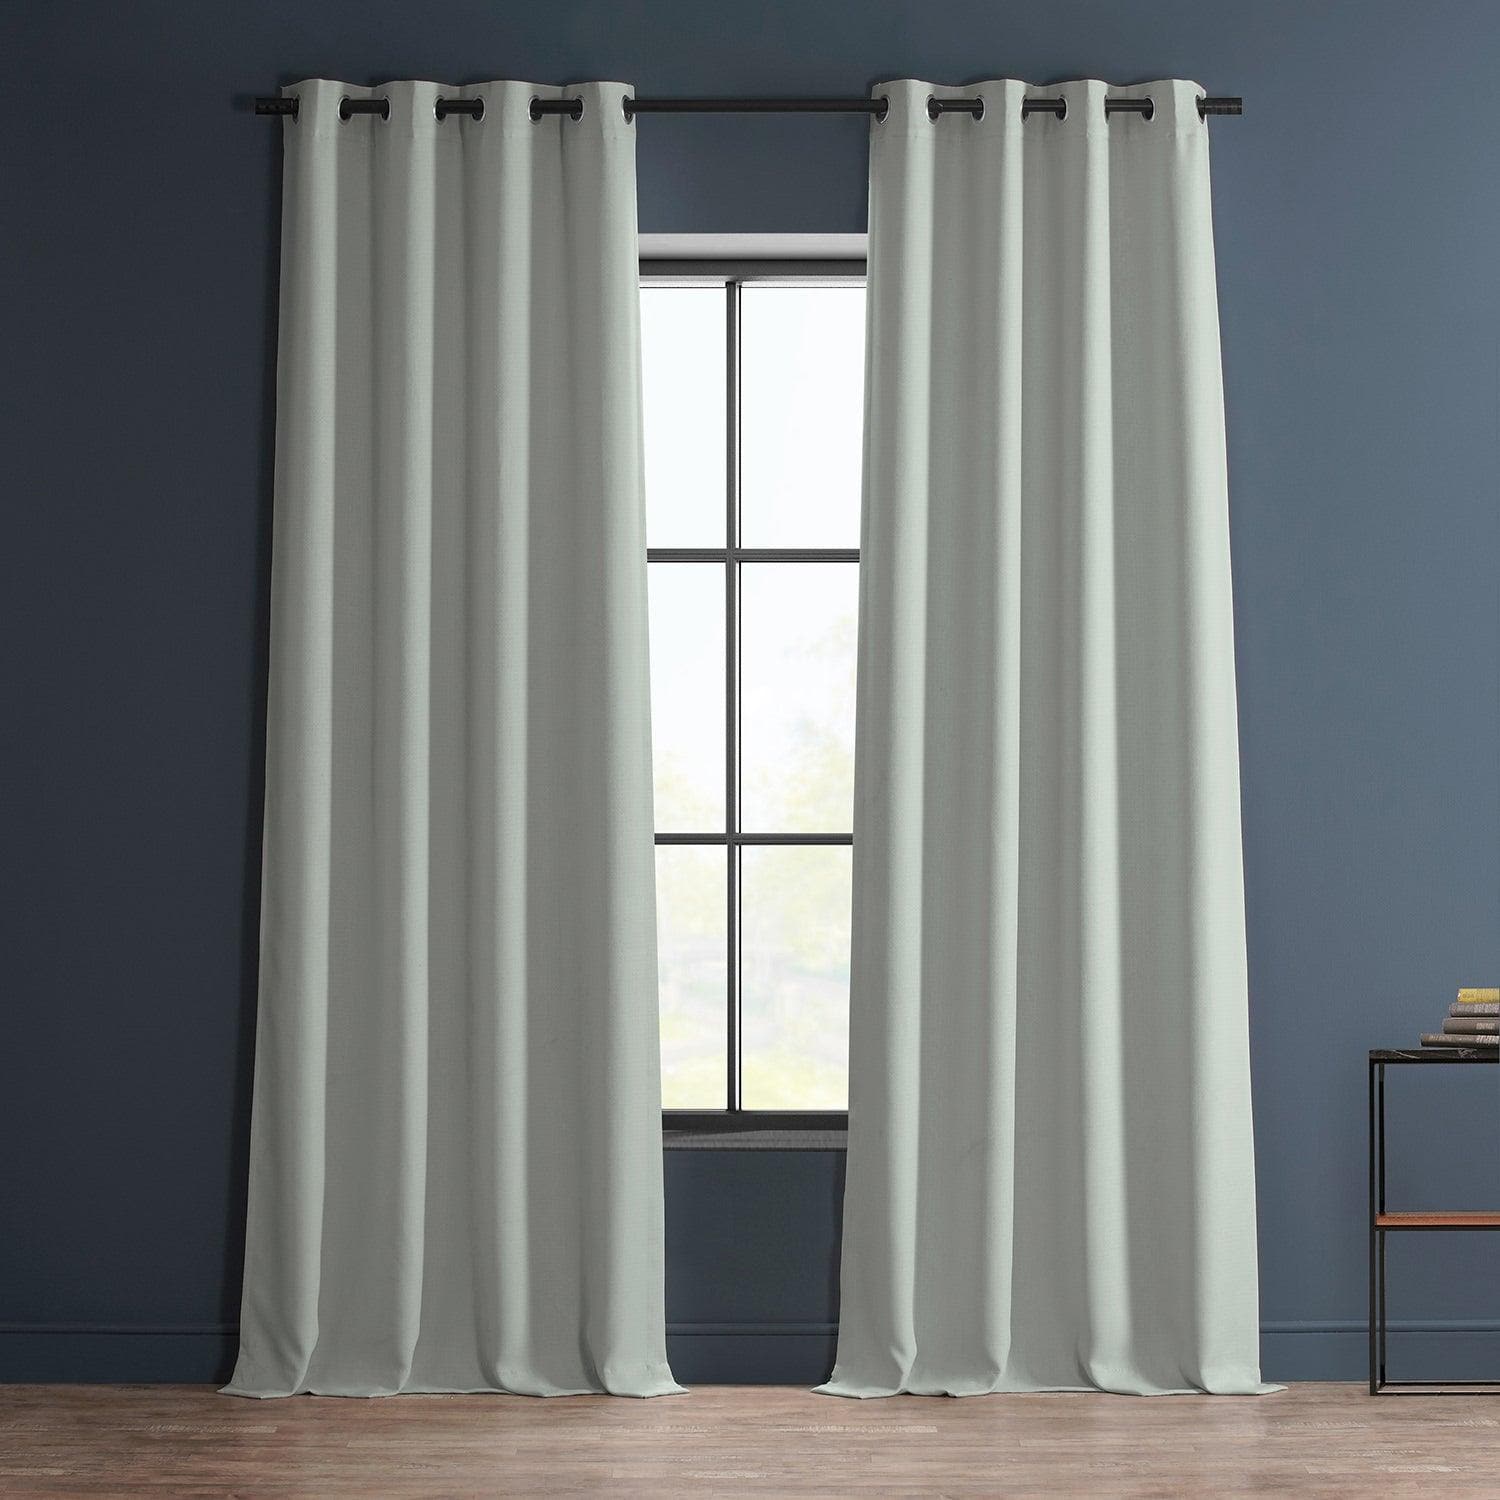 Oyster Grommet Textured Faux Linen Room Darkening Curtain